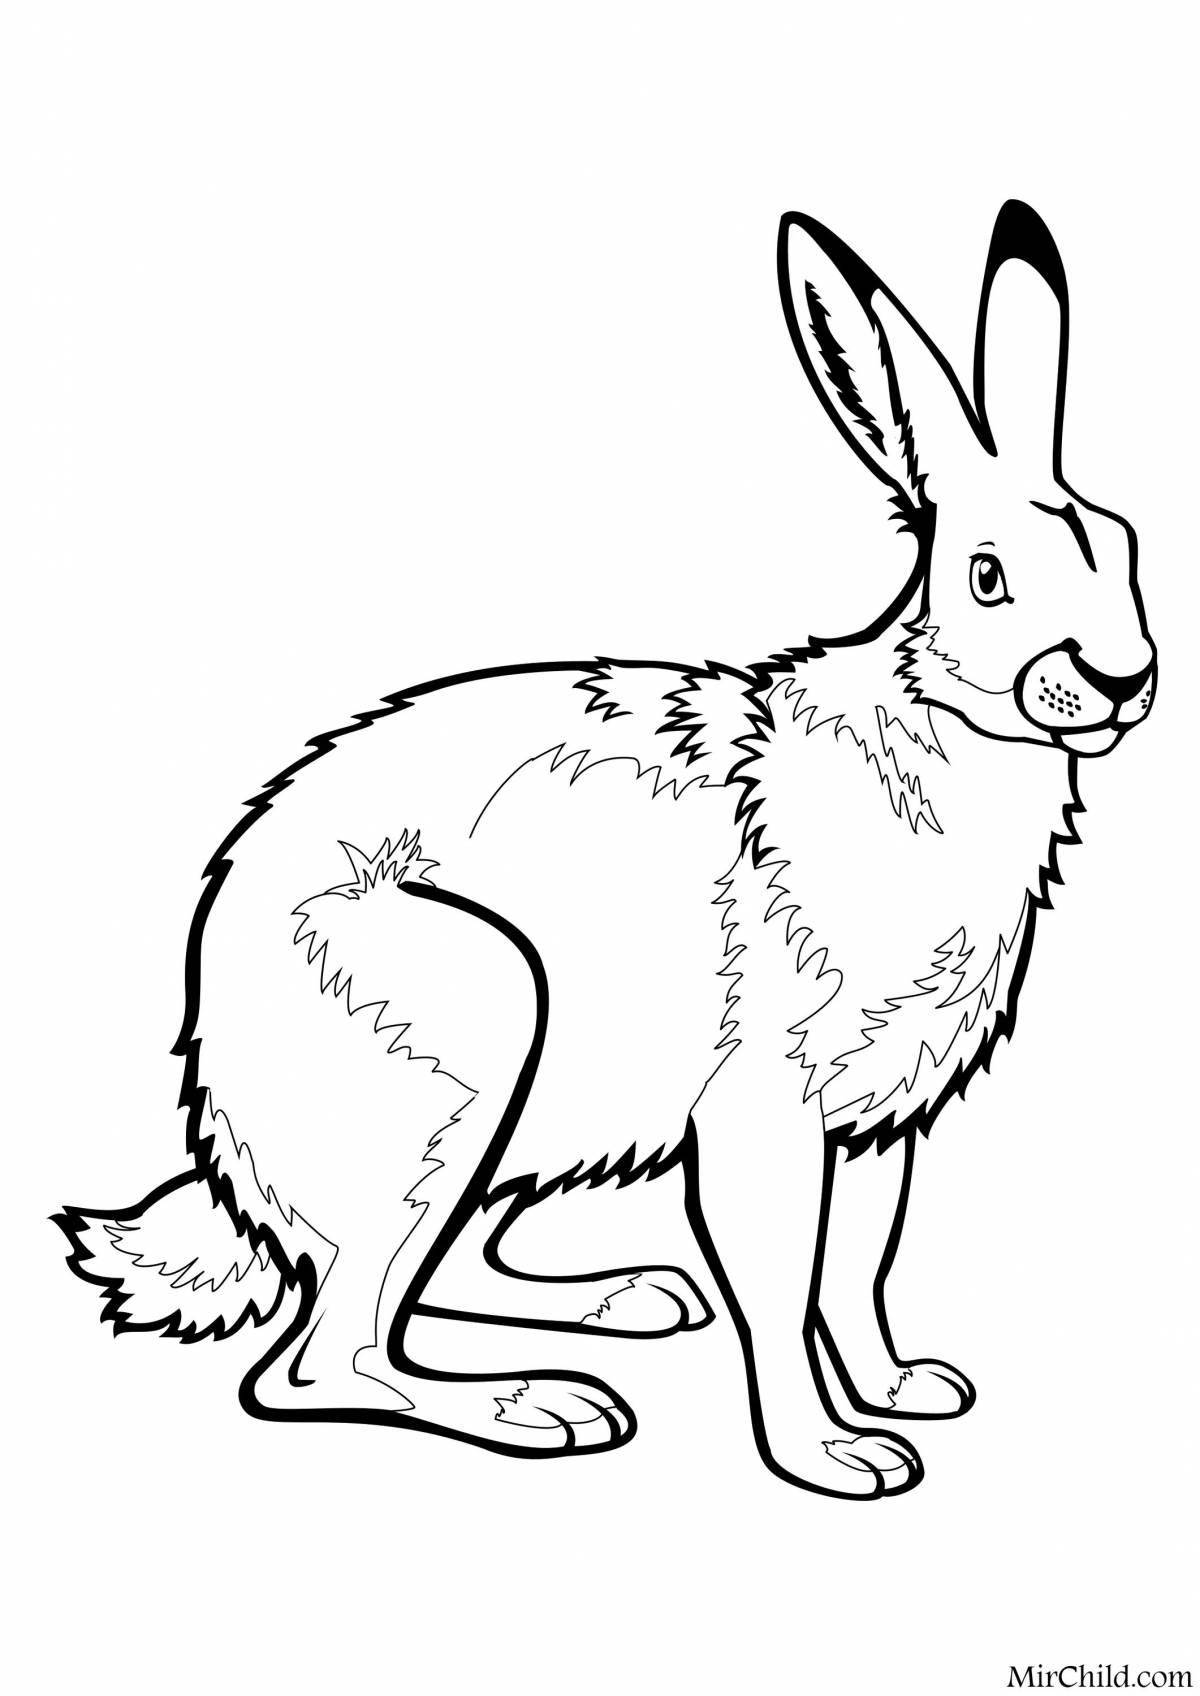 Coloring book calm hare